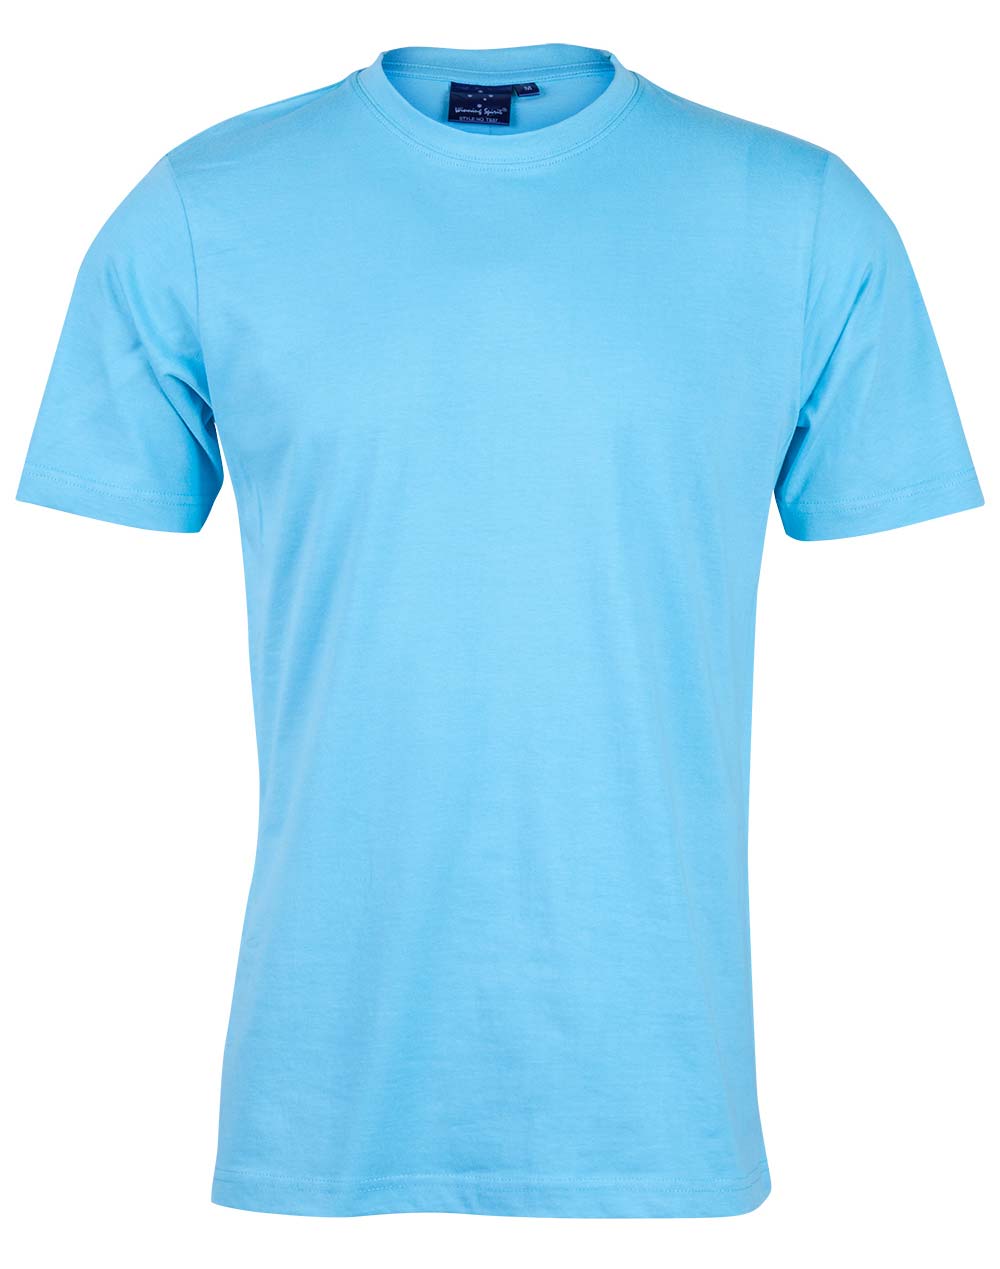 Custom (Fluoro Yellow) Semi-Fitted T-Shirts Men's Online in Perh Australia